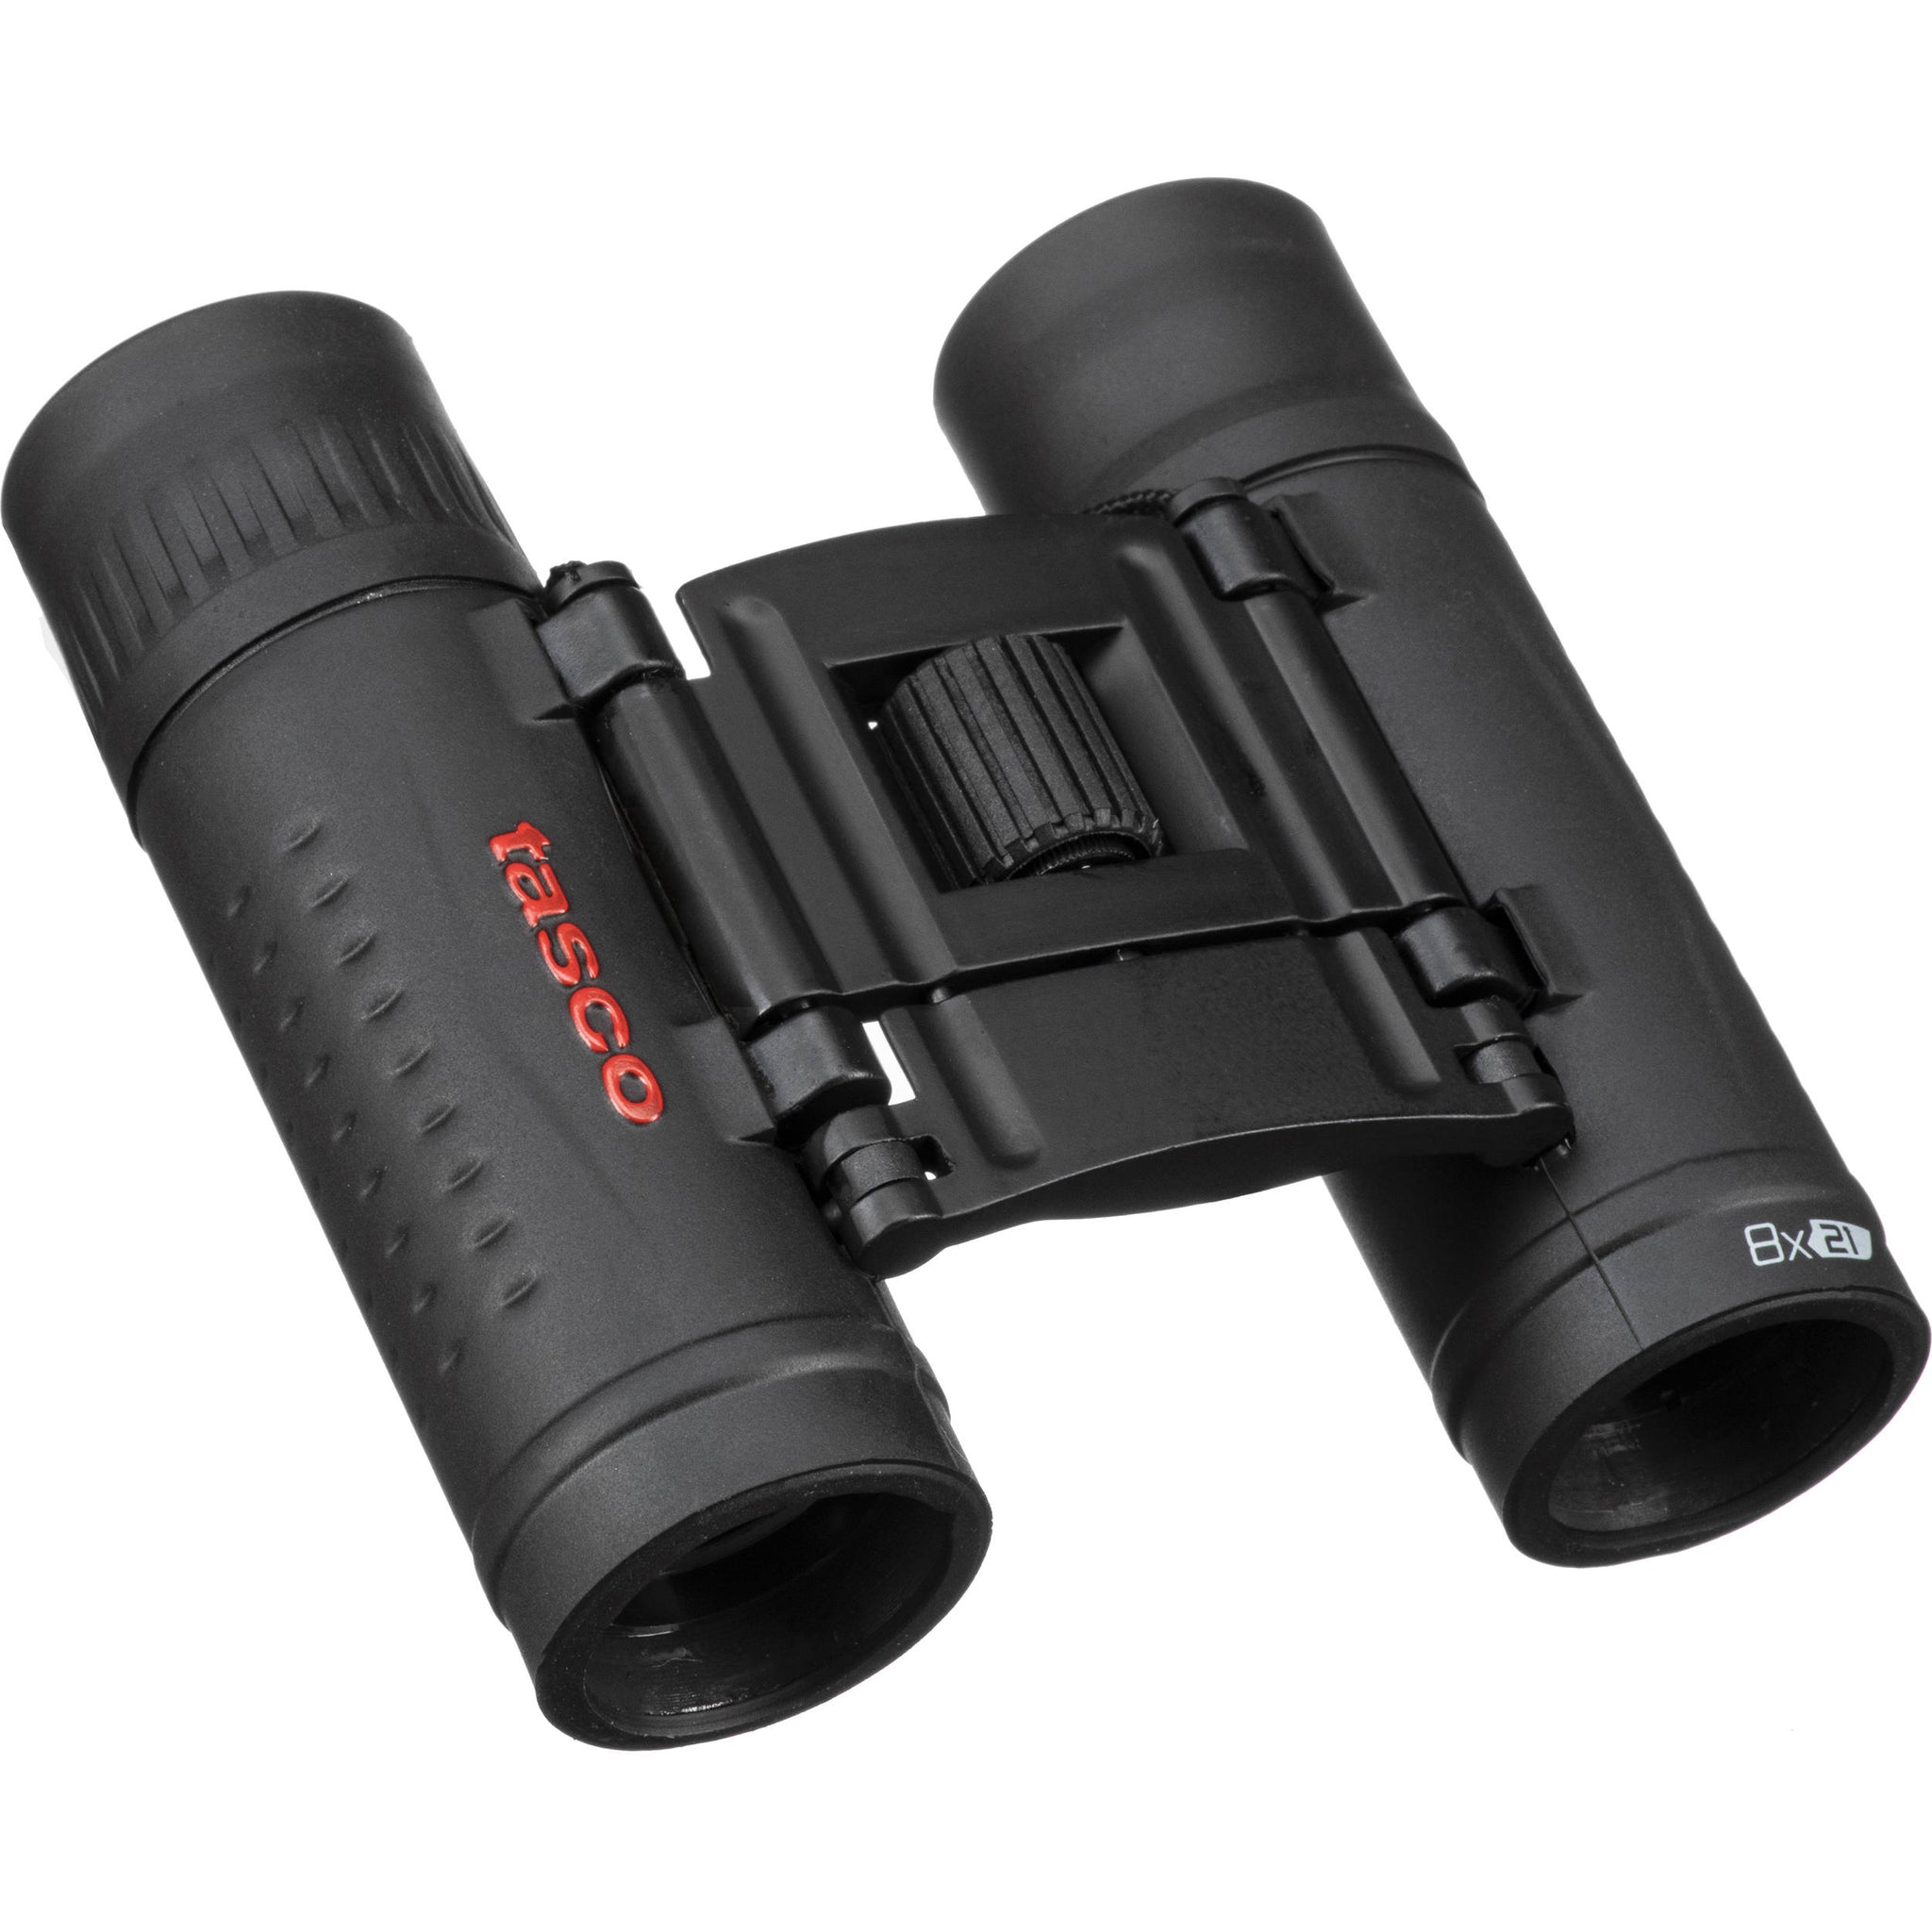 Tasco 8x21 Essential Compact Binoculars